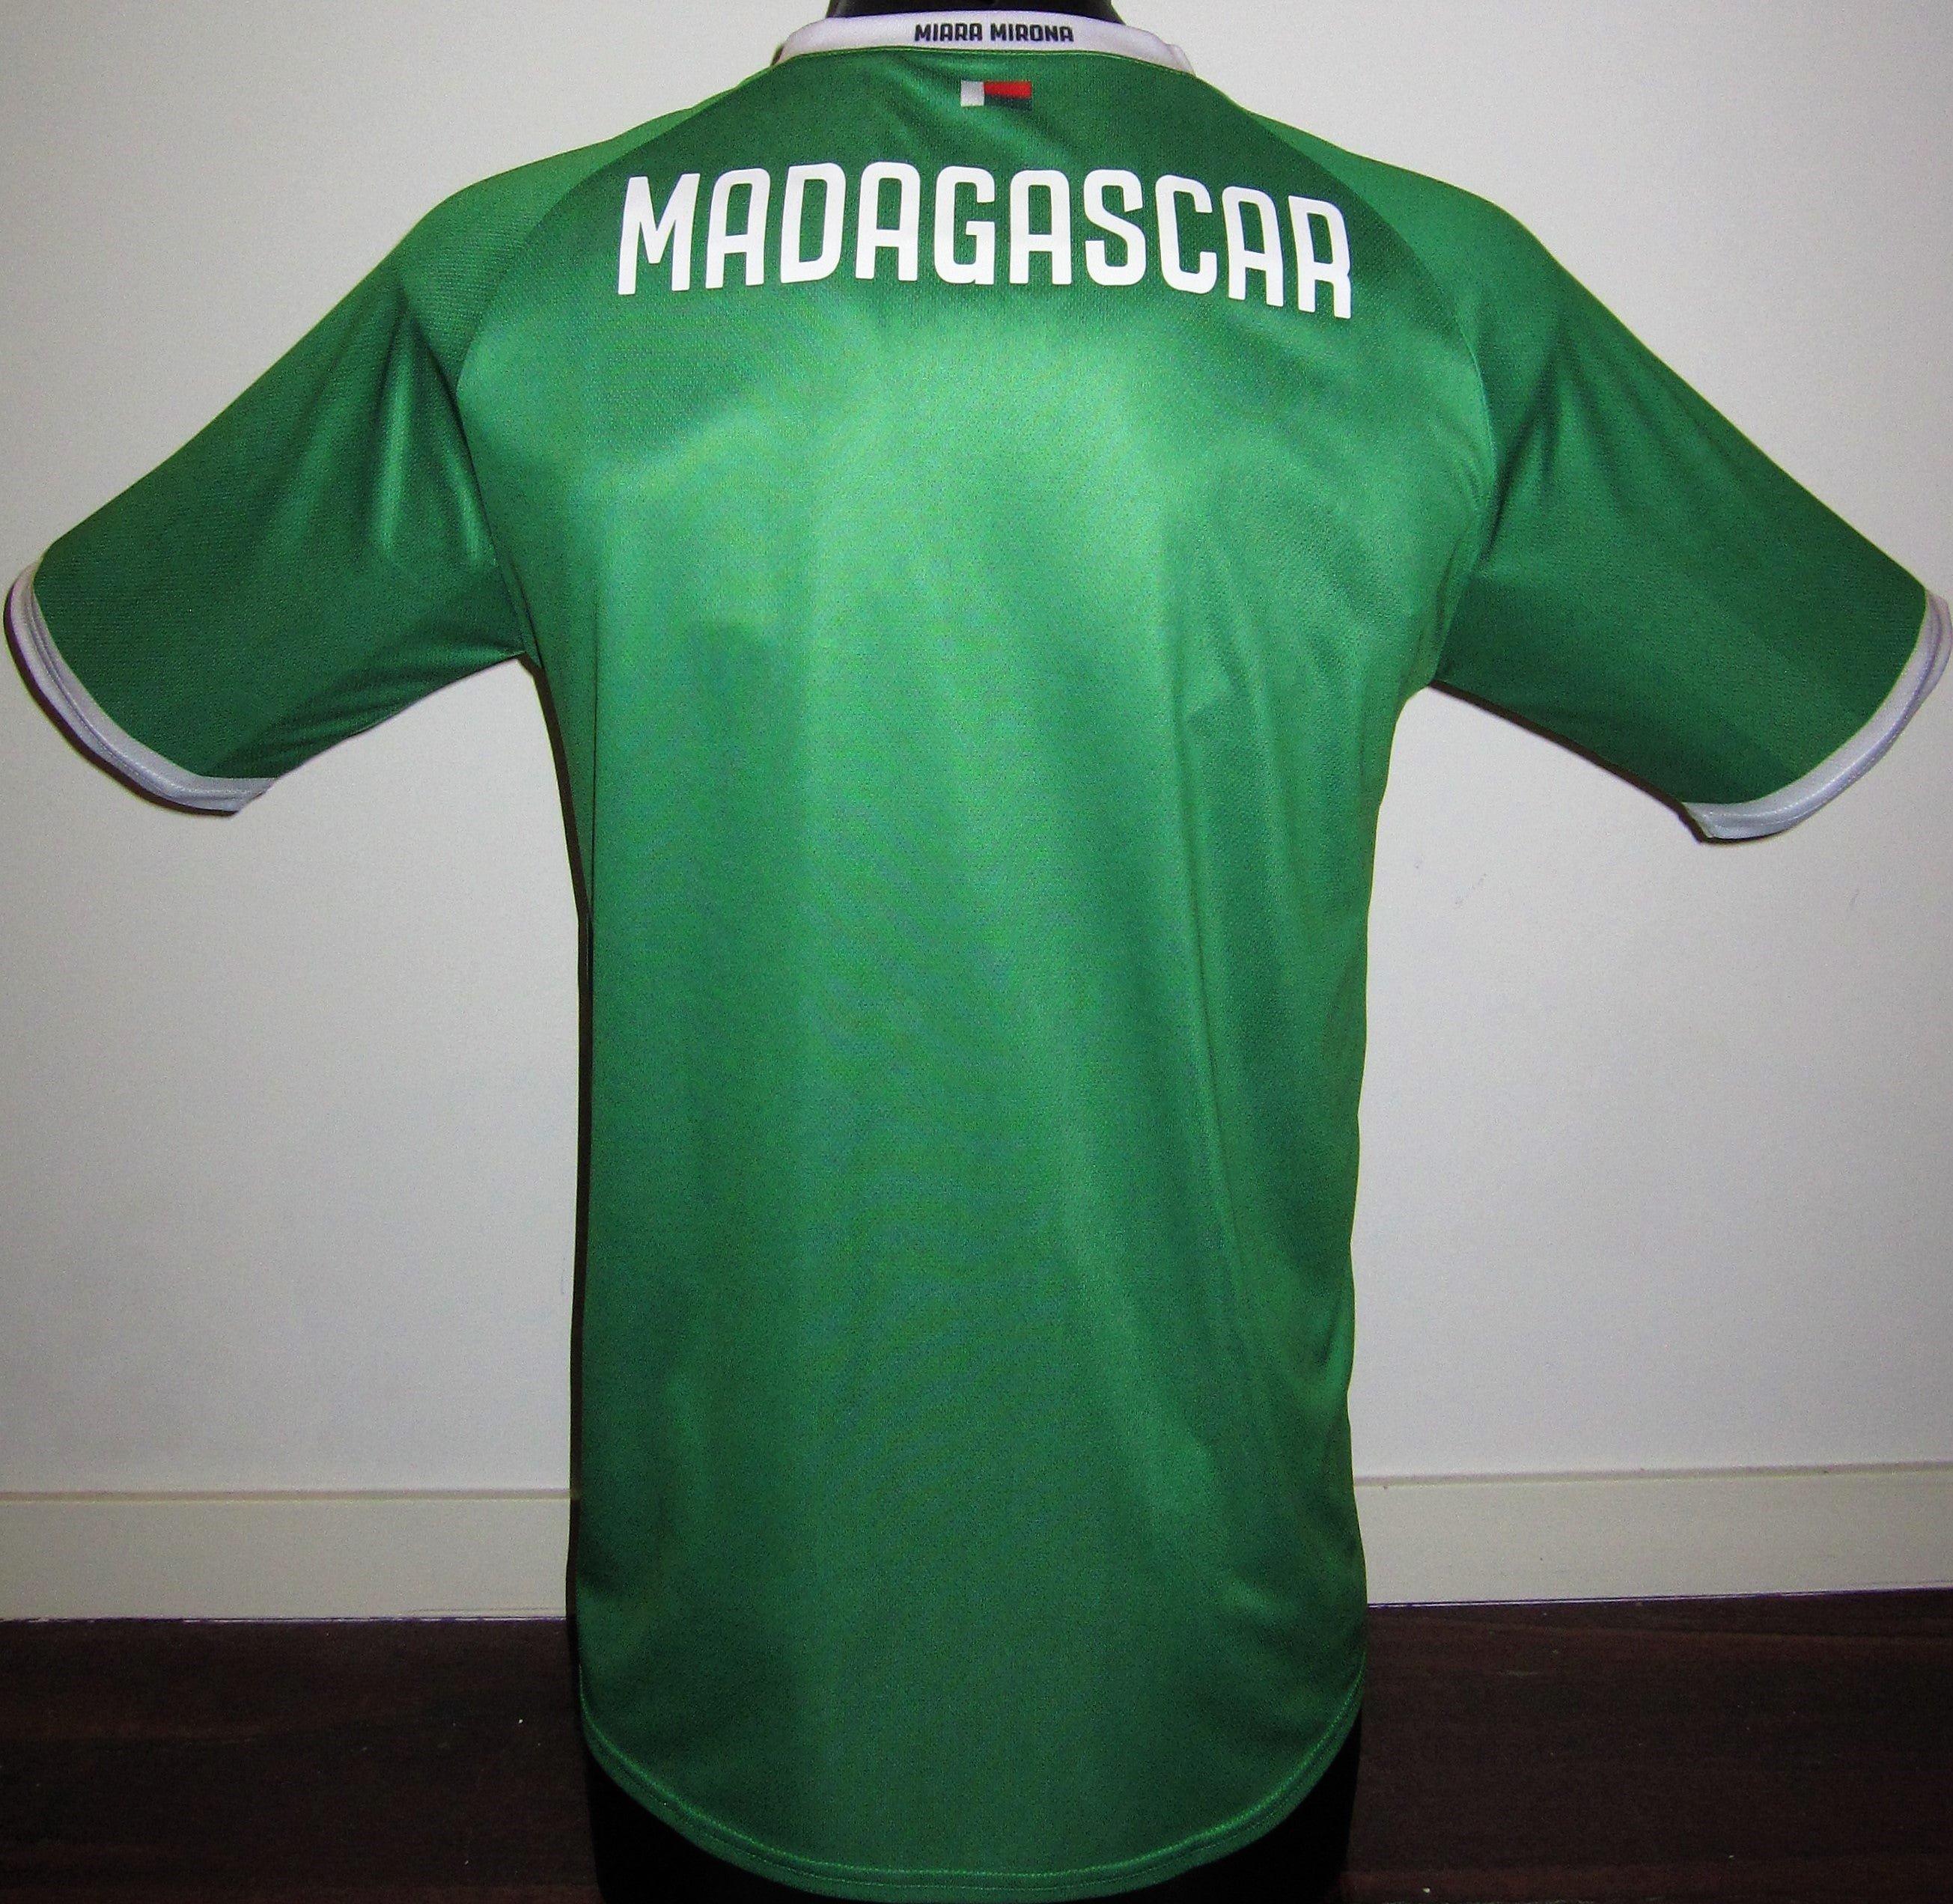 Madagascar 2019 Home Jersey/Shirt